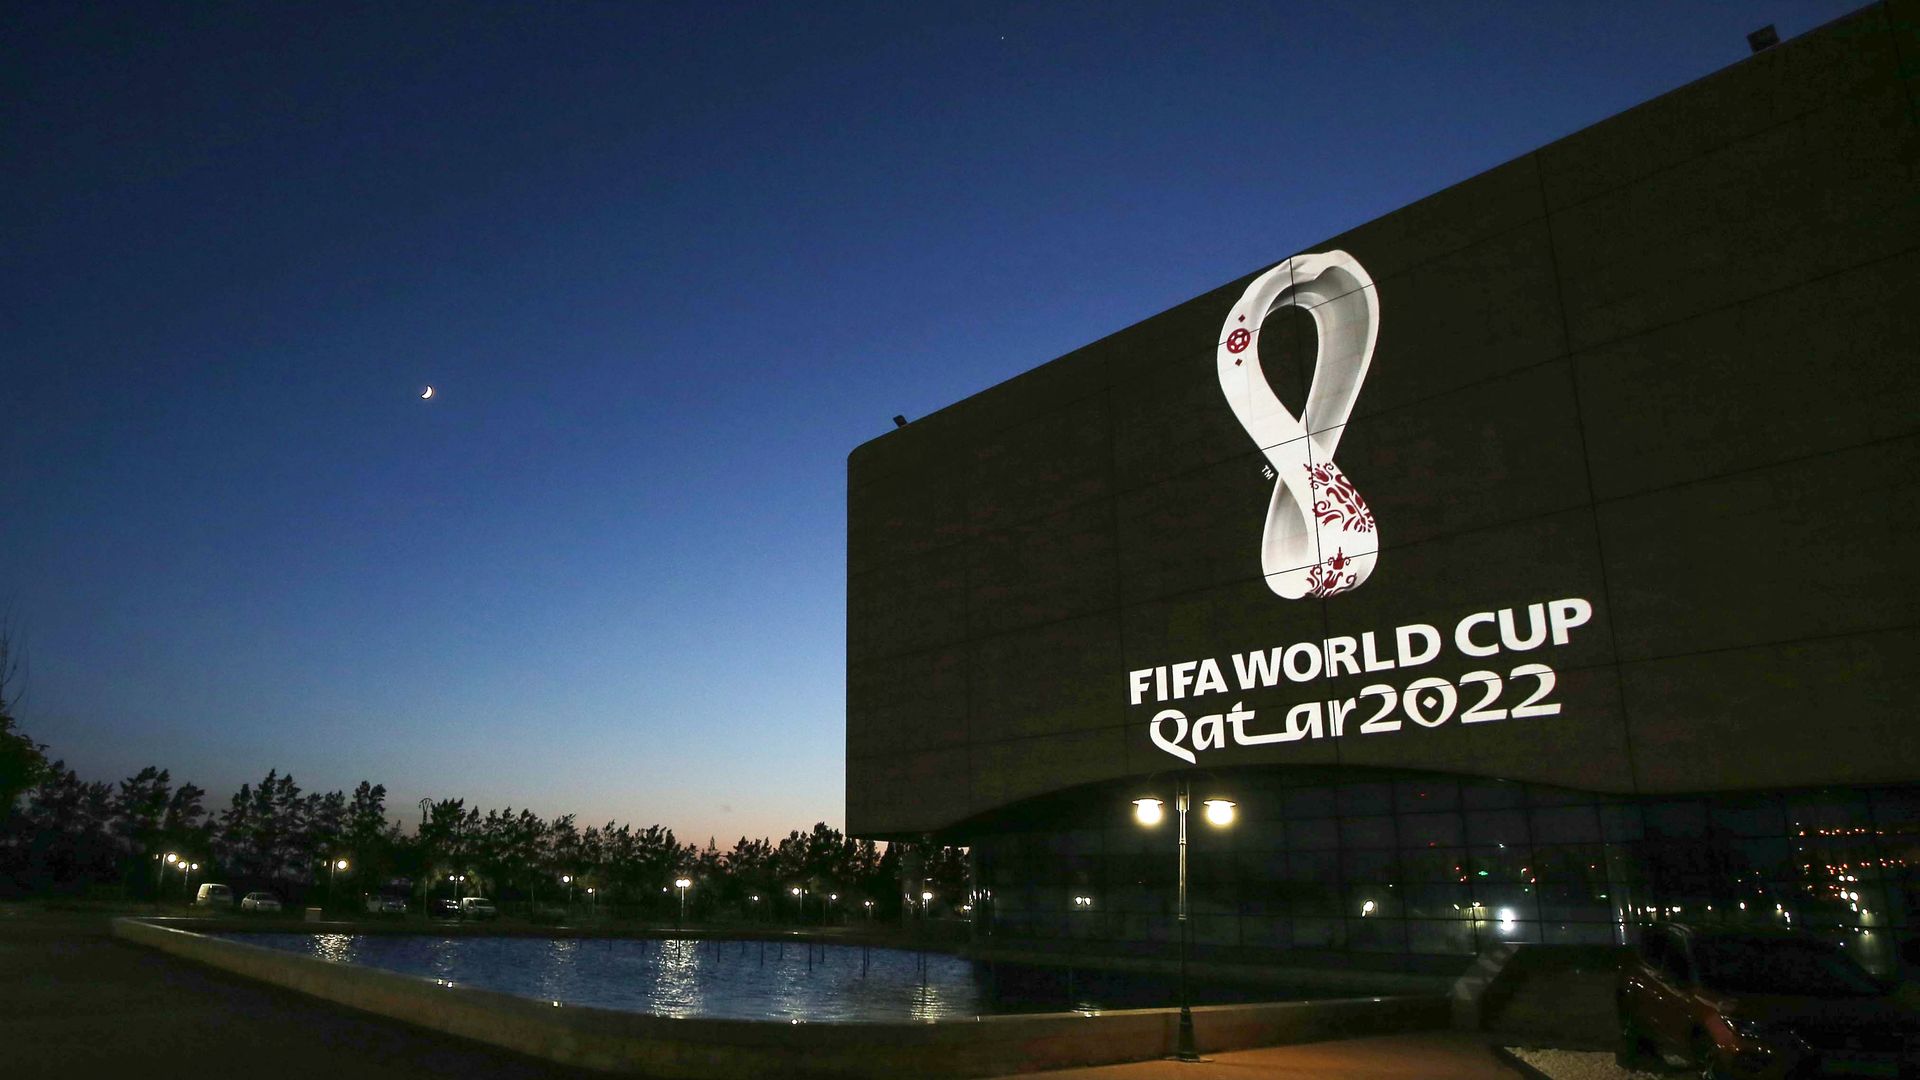 qatar 2022 world cup logo at night